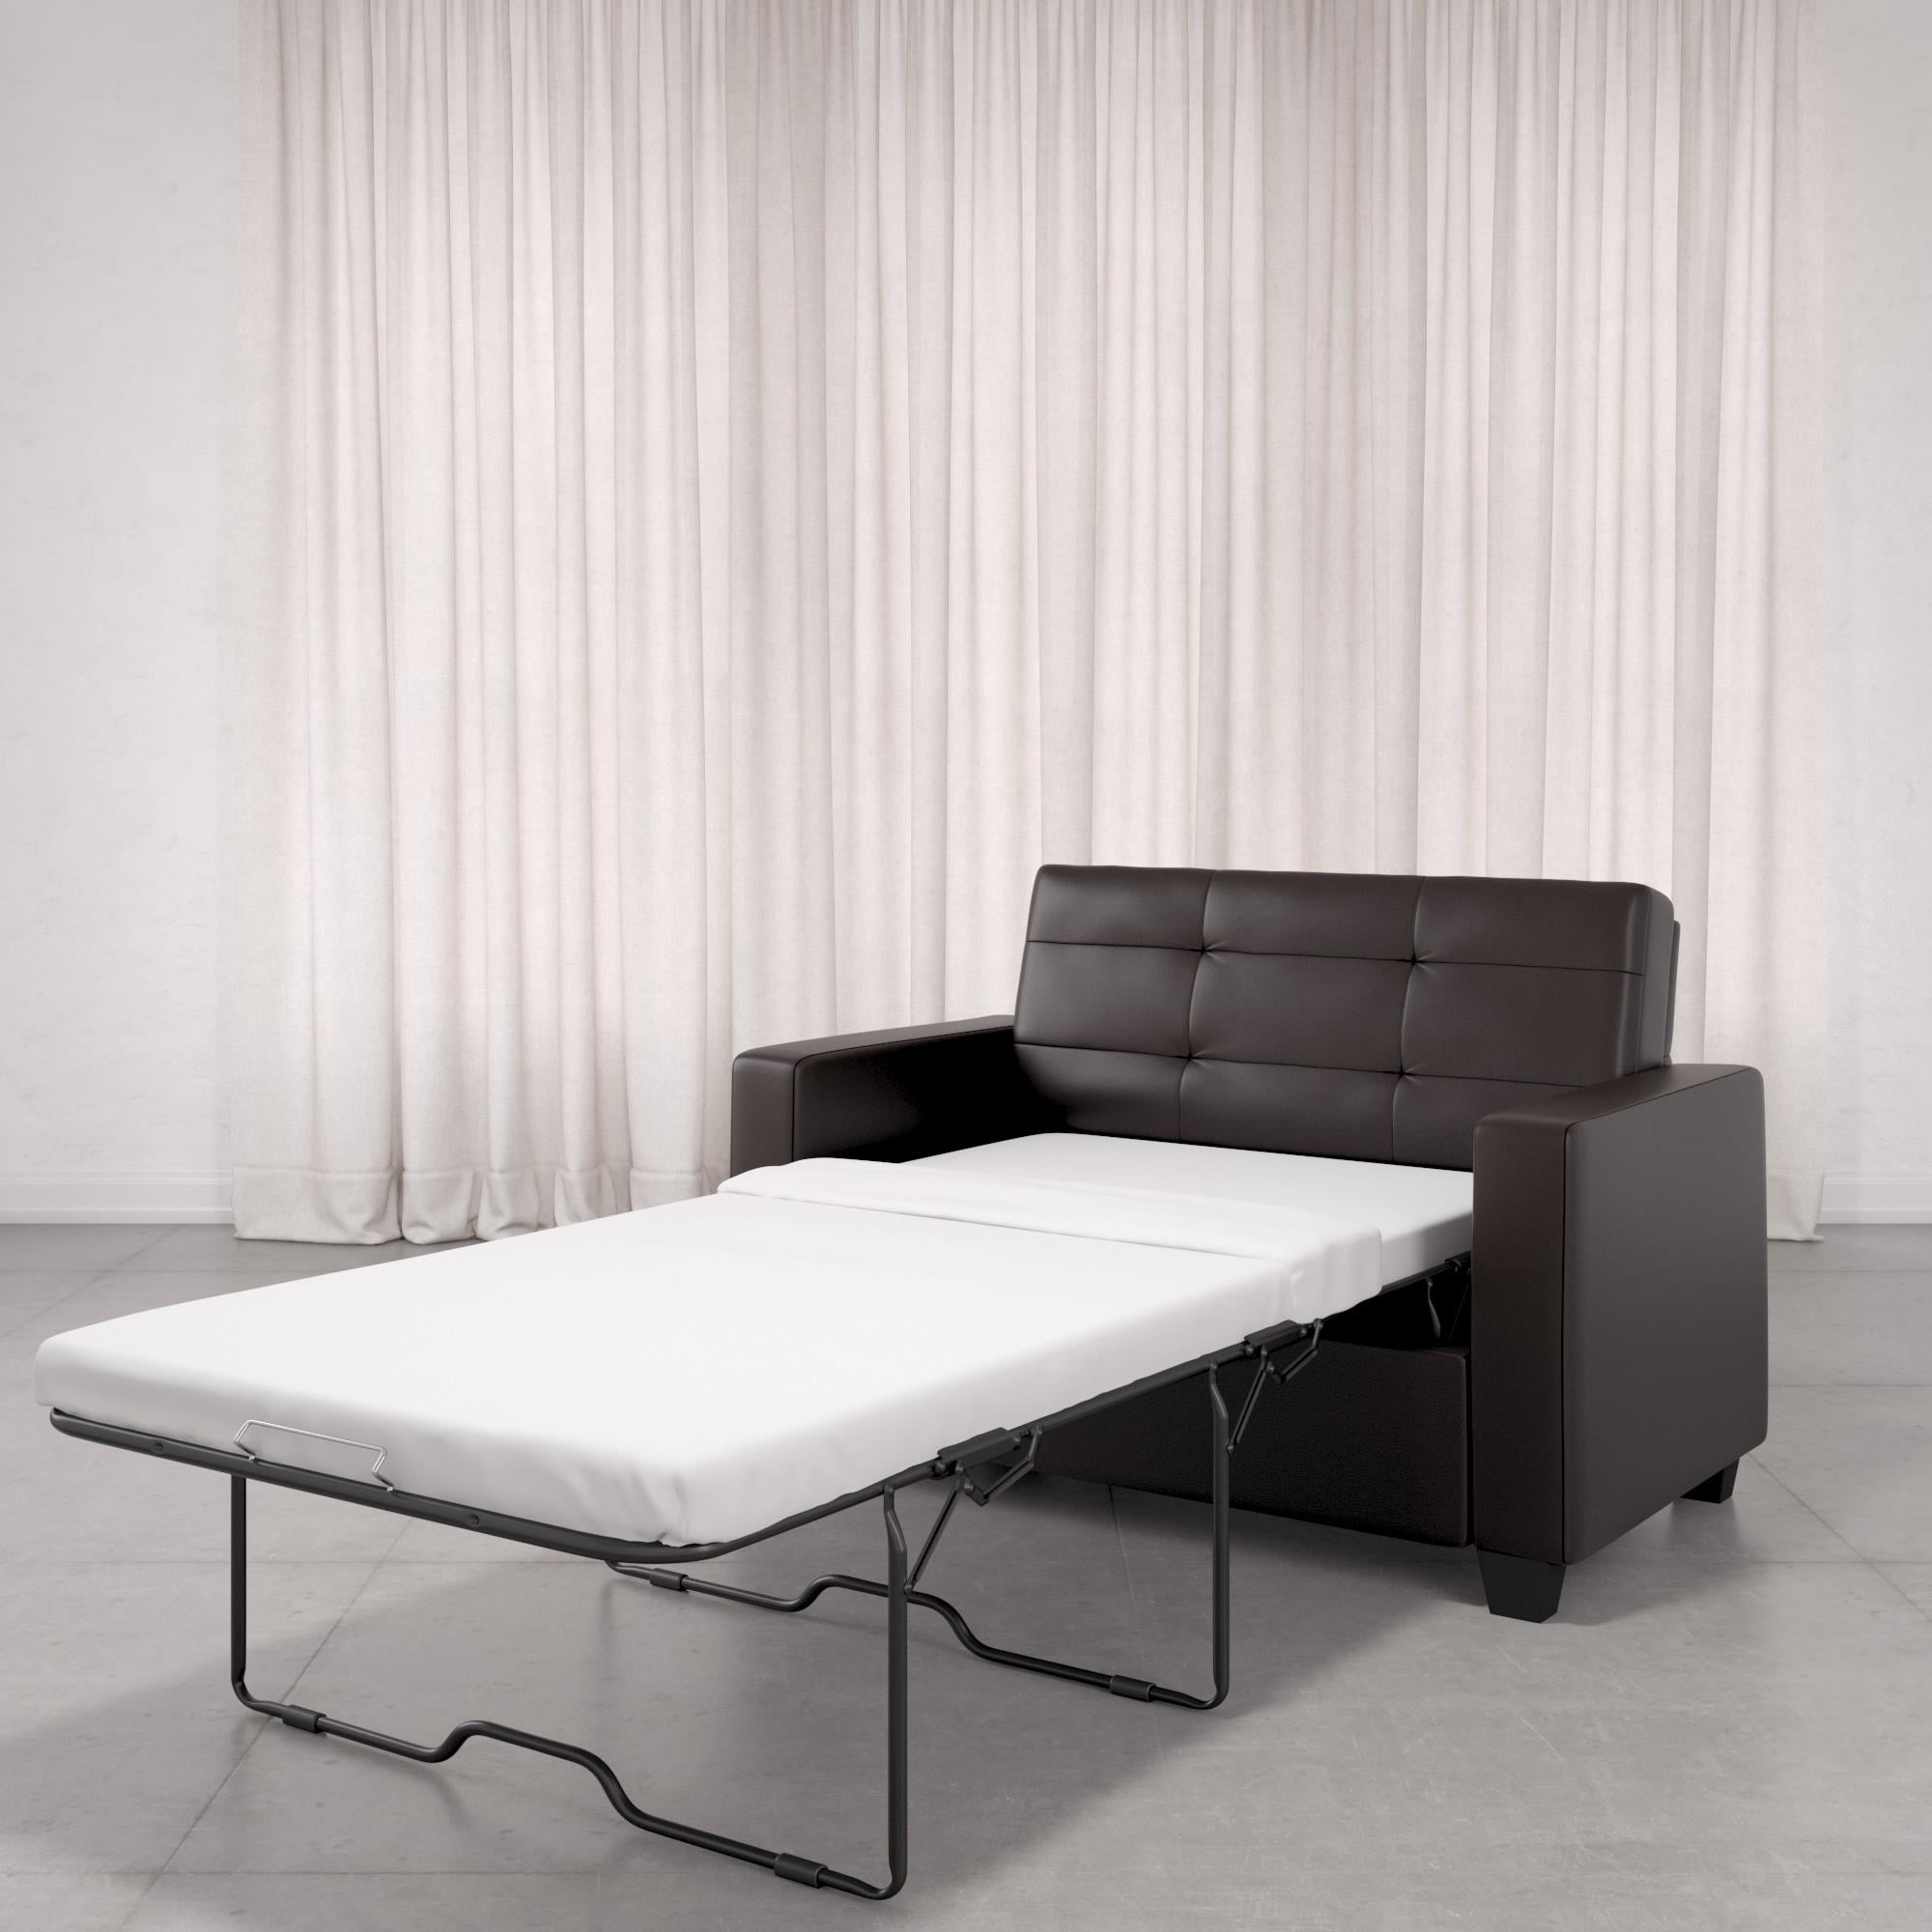 Mainstays Loveseat Sleeper Sofa With, Leather Loveseat Sleeper Bed